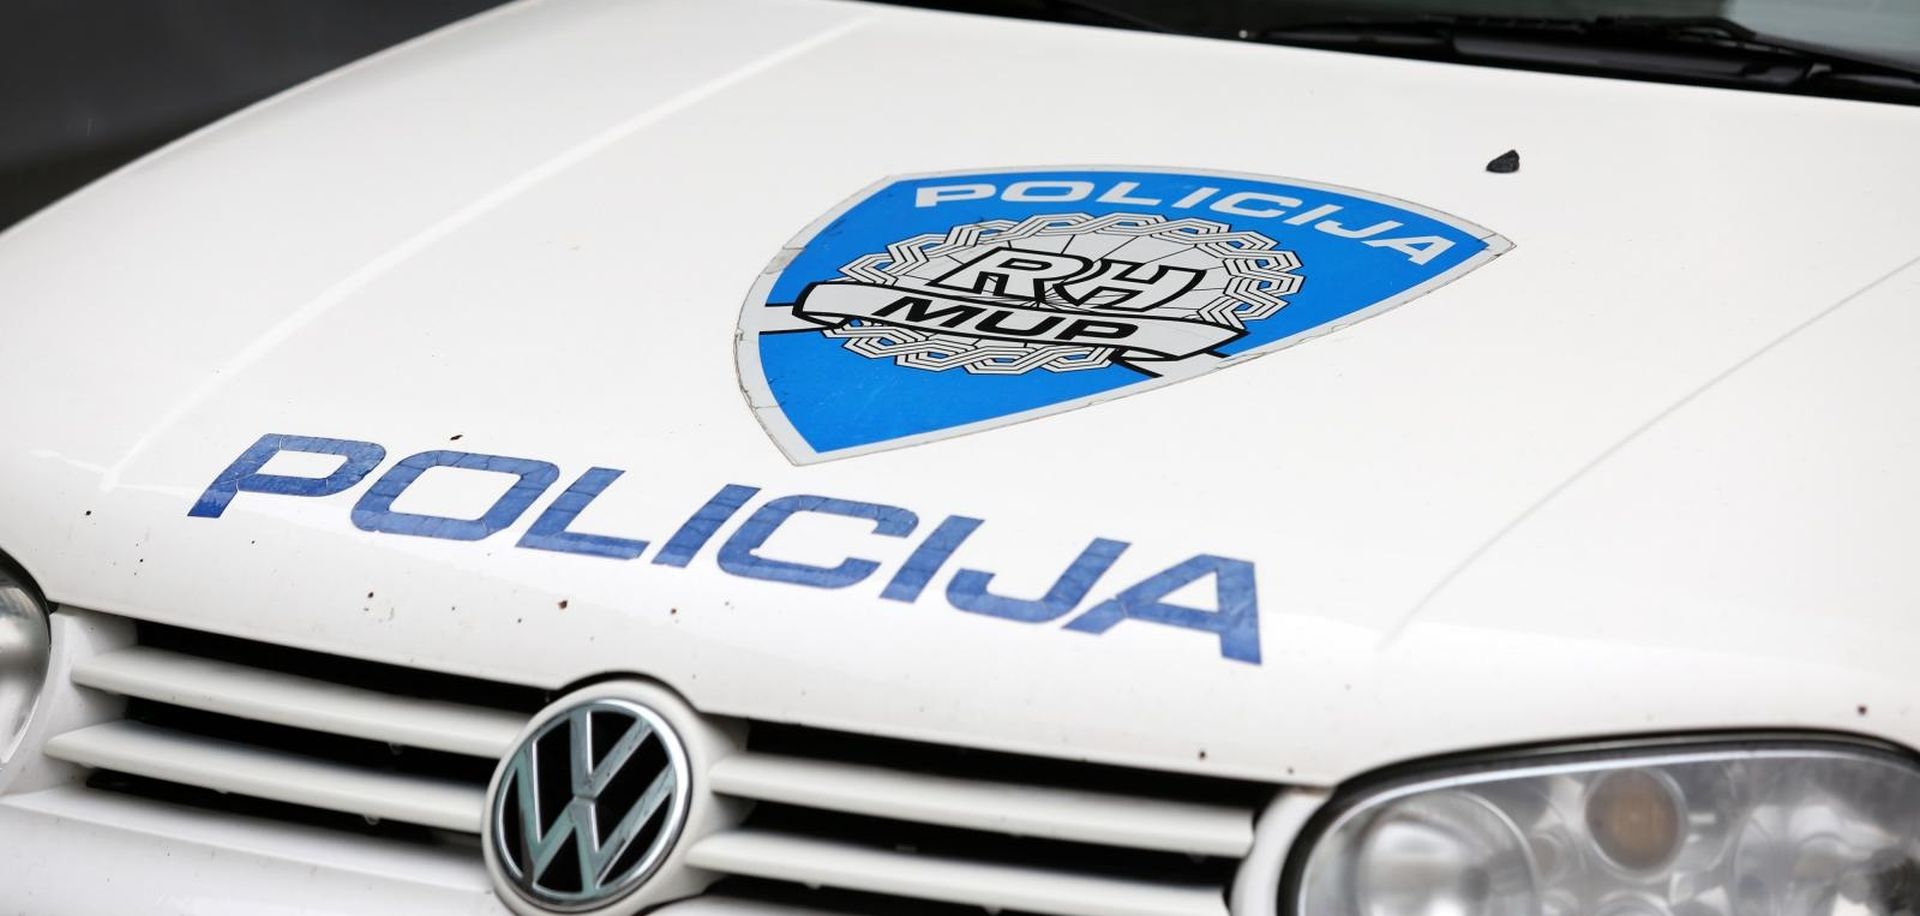 06.03.2018., Sibenik -
Policijski automobili.
Photo: Dusko Jaramaz/PIXSELL